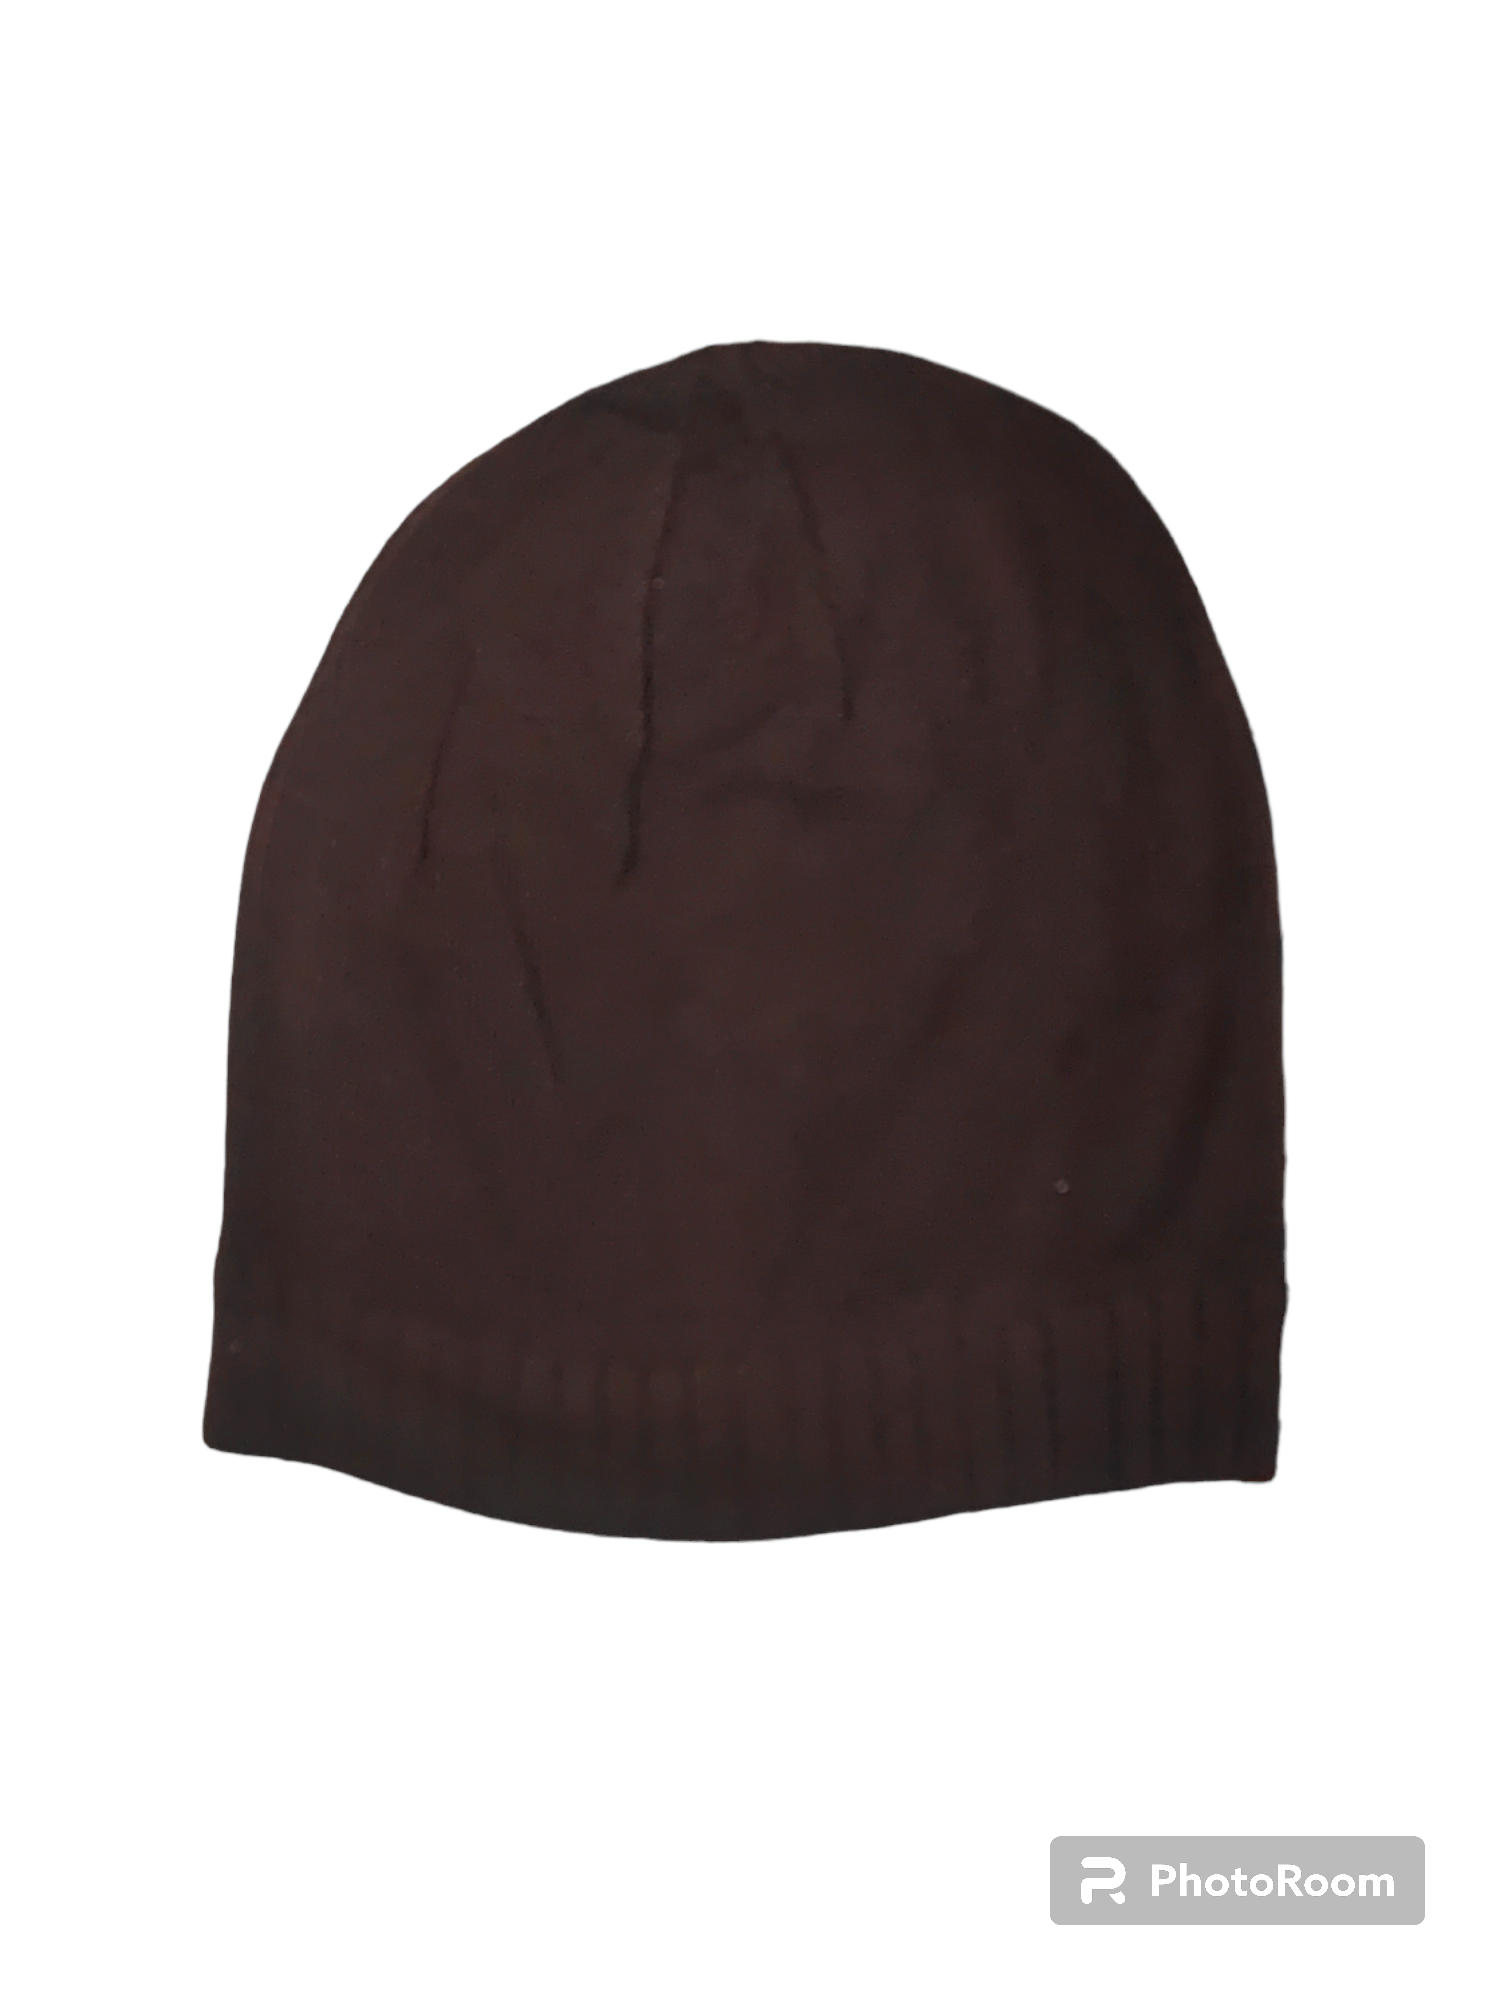 Fleece hat detail (x12)